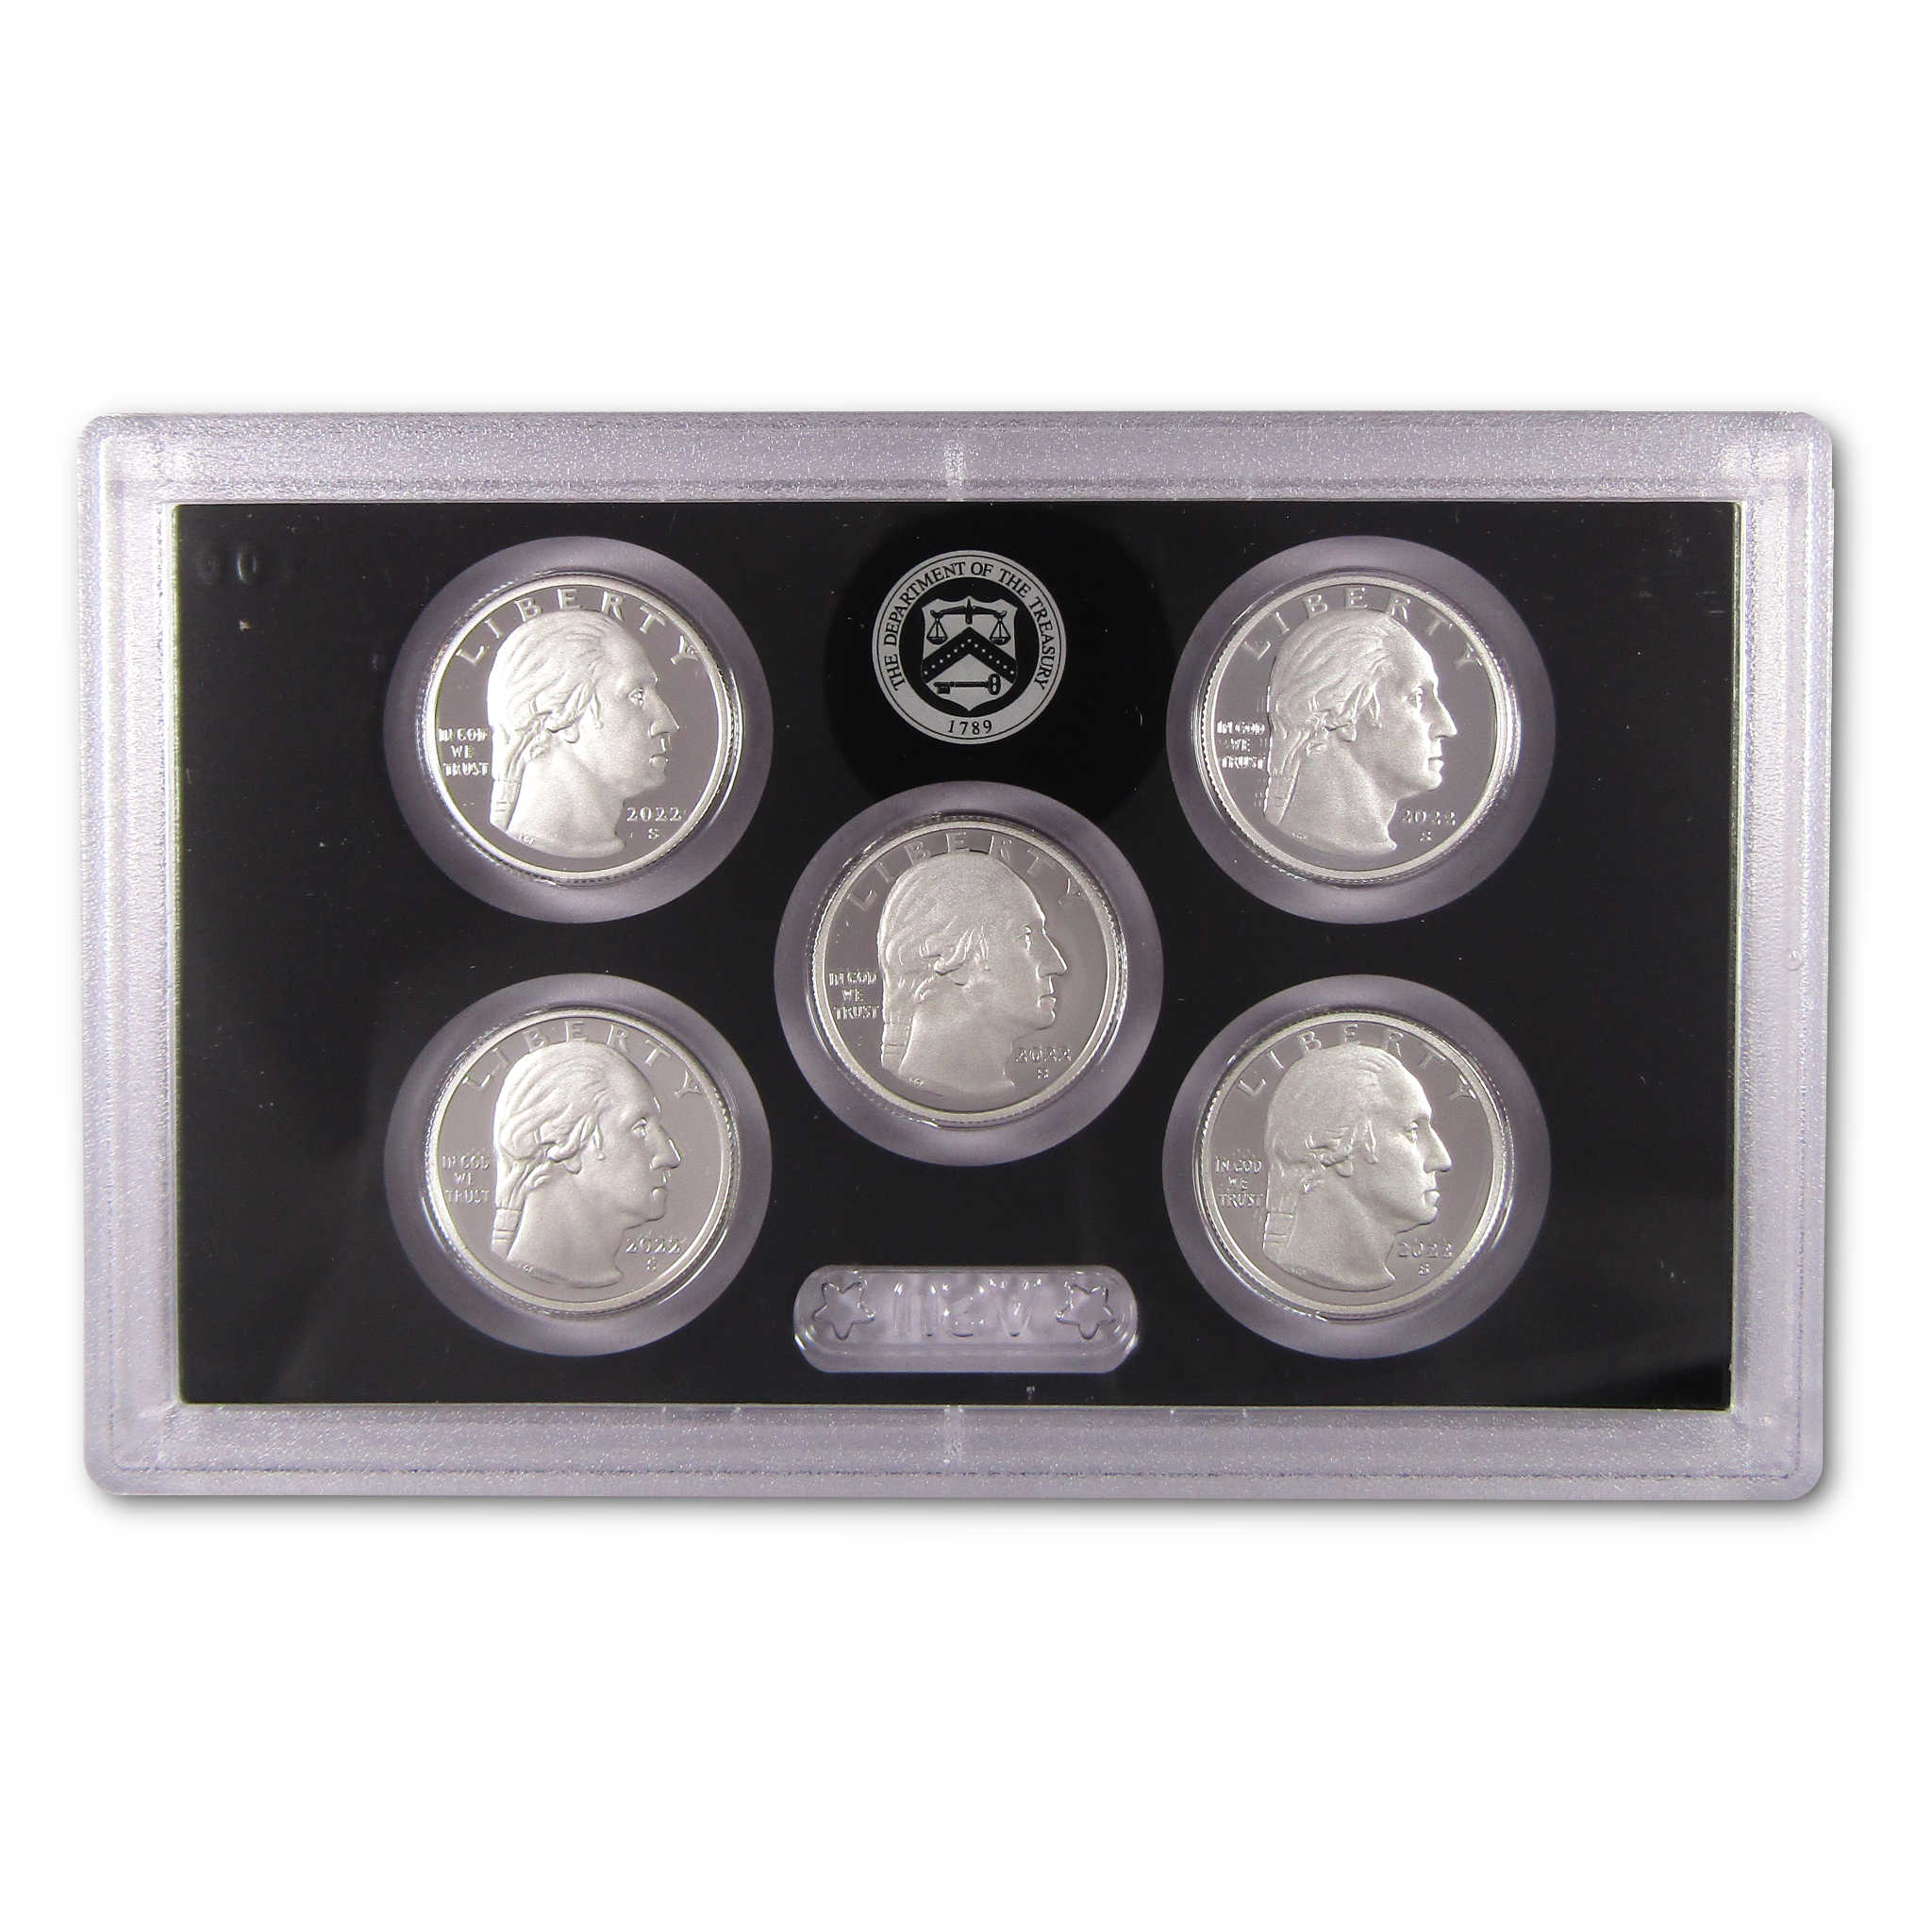 2022 American Women Quarter Silver Proof Set U.S. Mint OGP COA